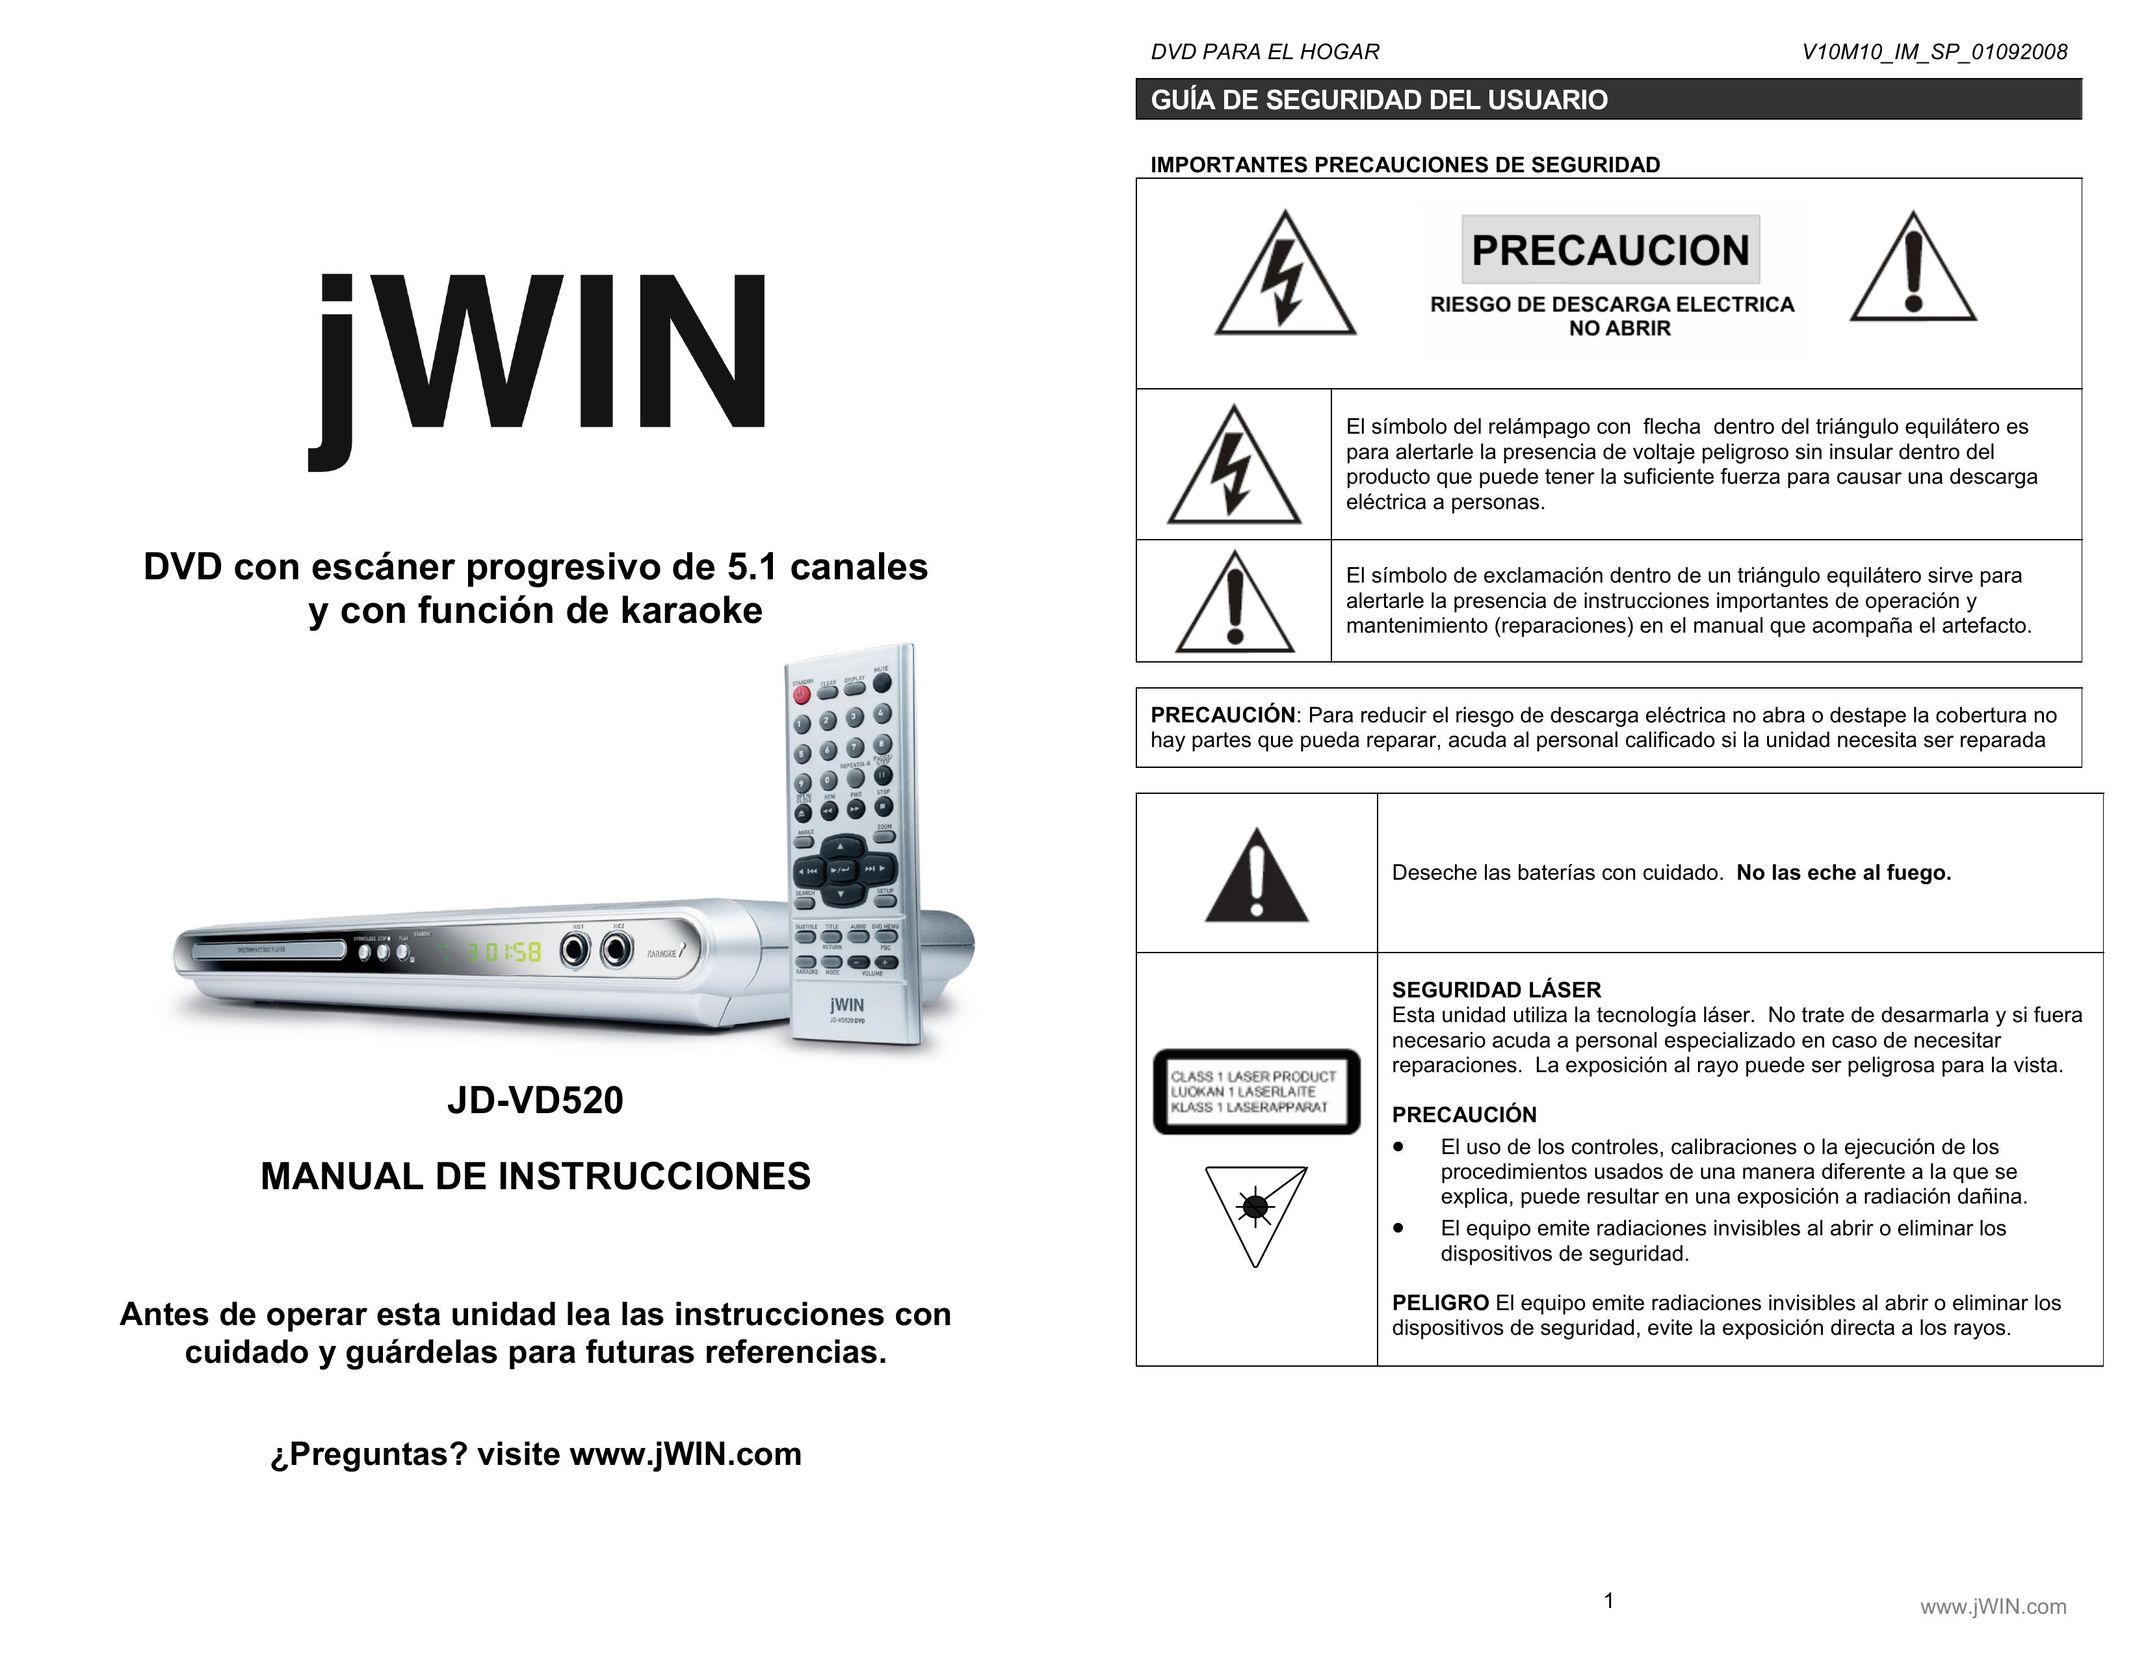 Jwin JD-VD520 Portable DVD Player User Manual